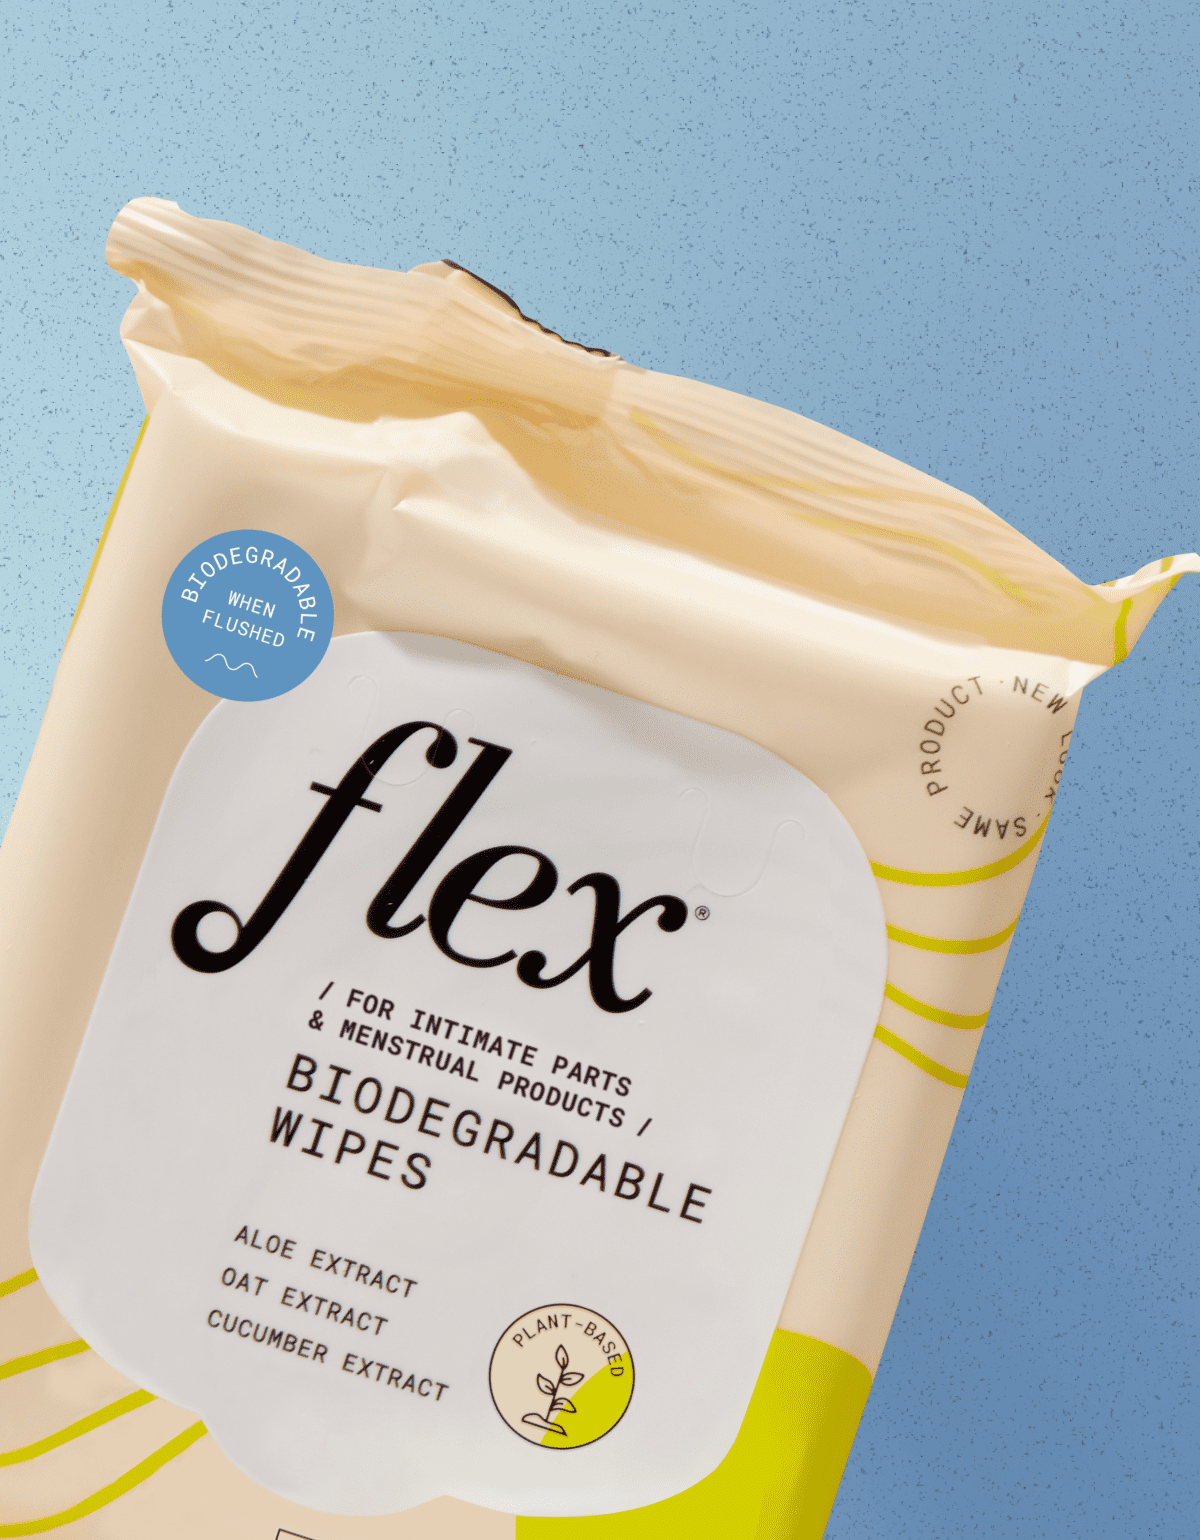 10 surprising ways to use Flex wipes